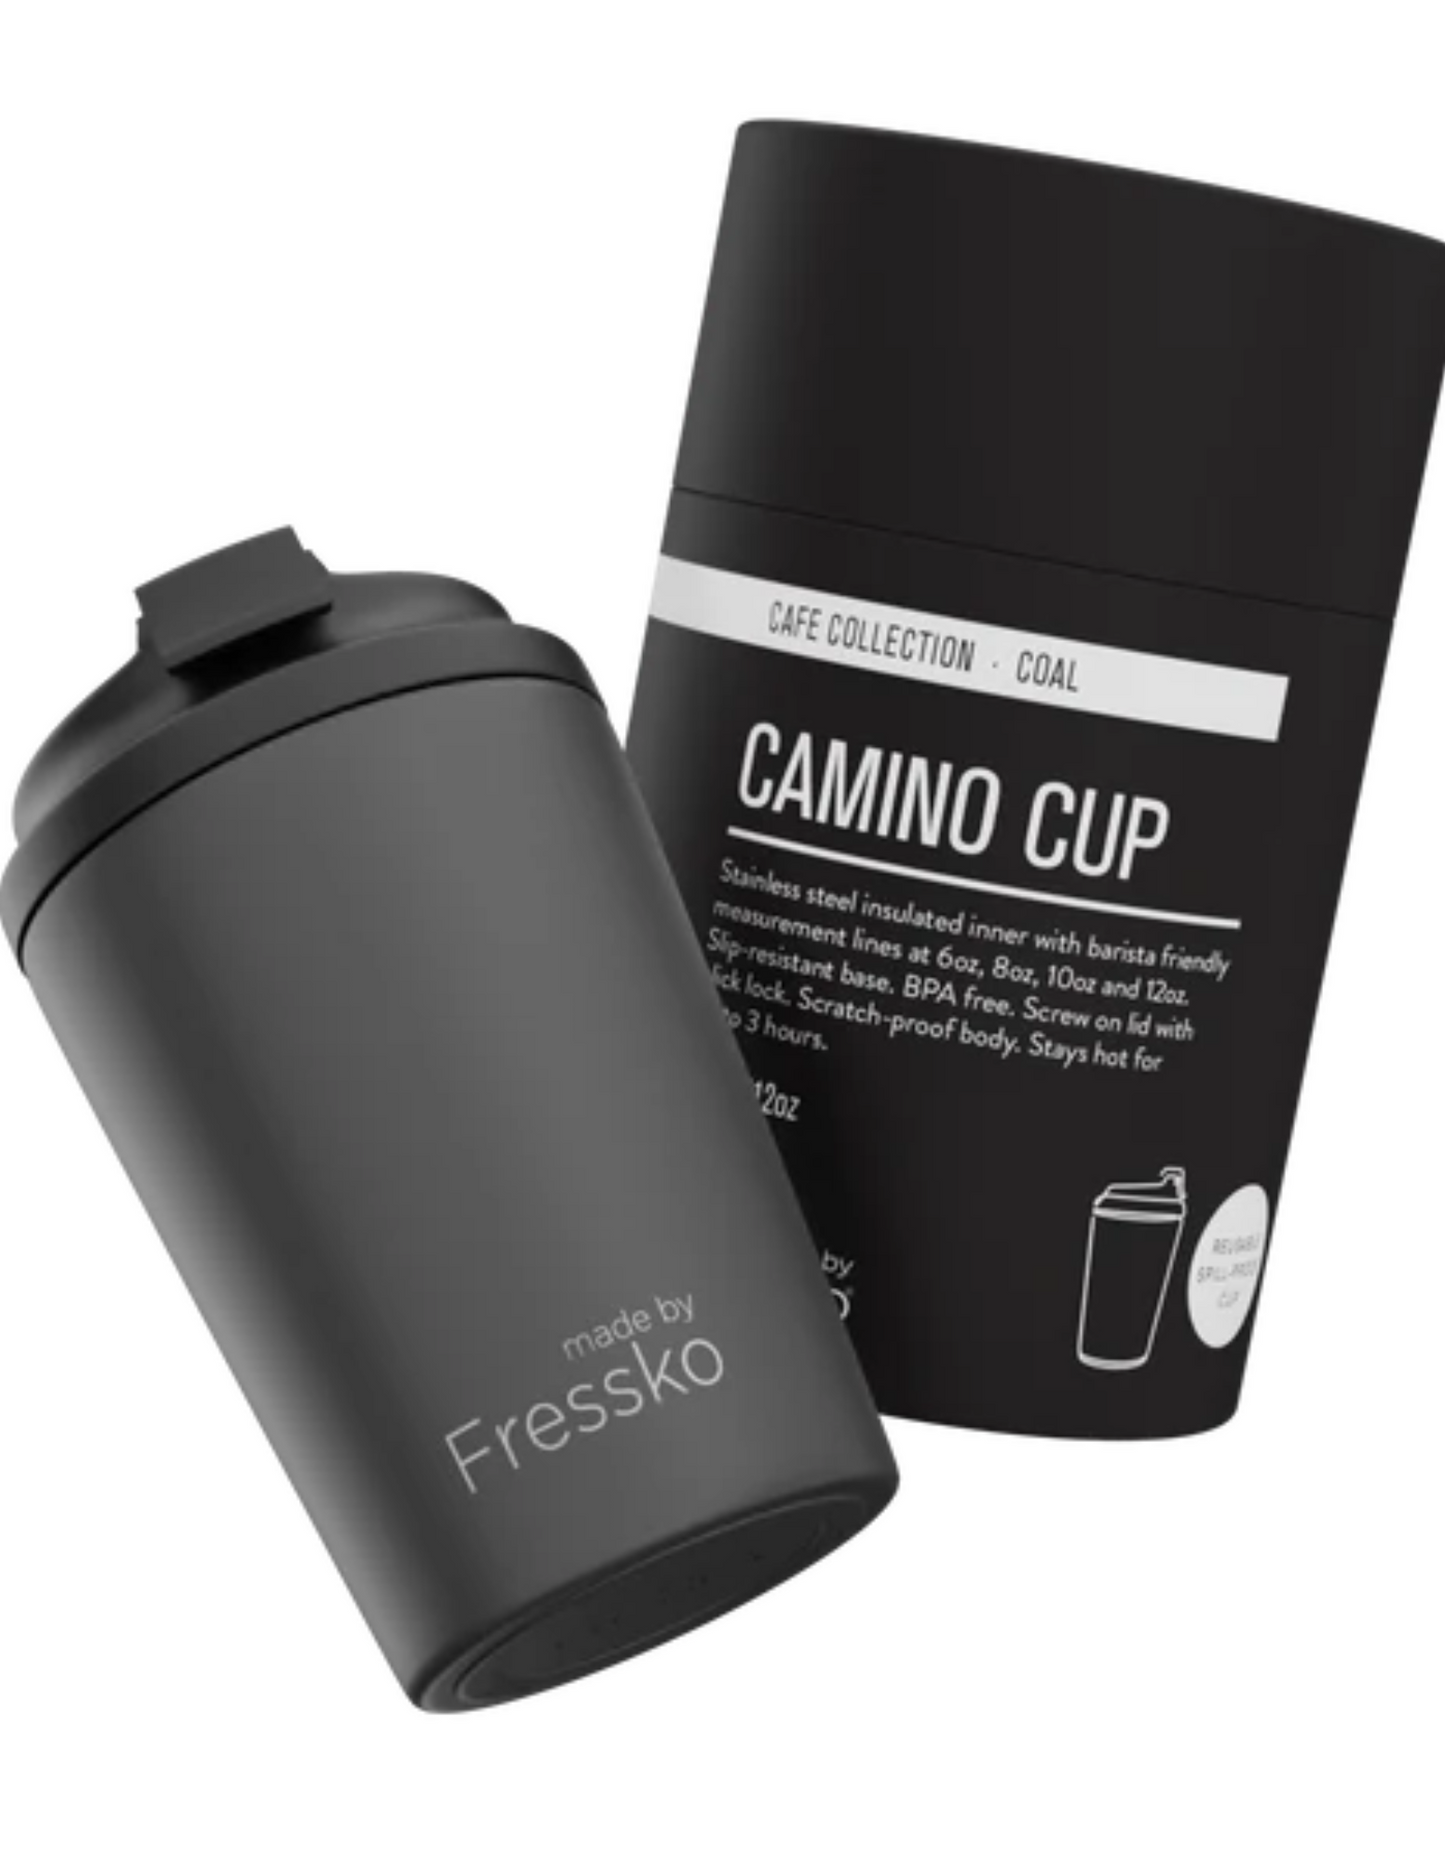 12 oz Camino Cup - Coal - Fressko